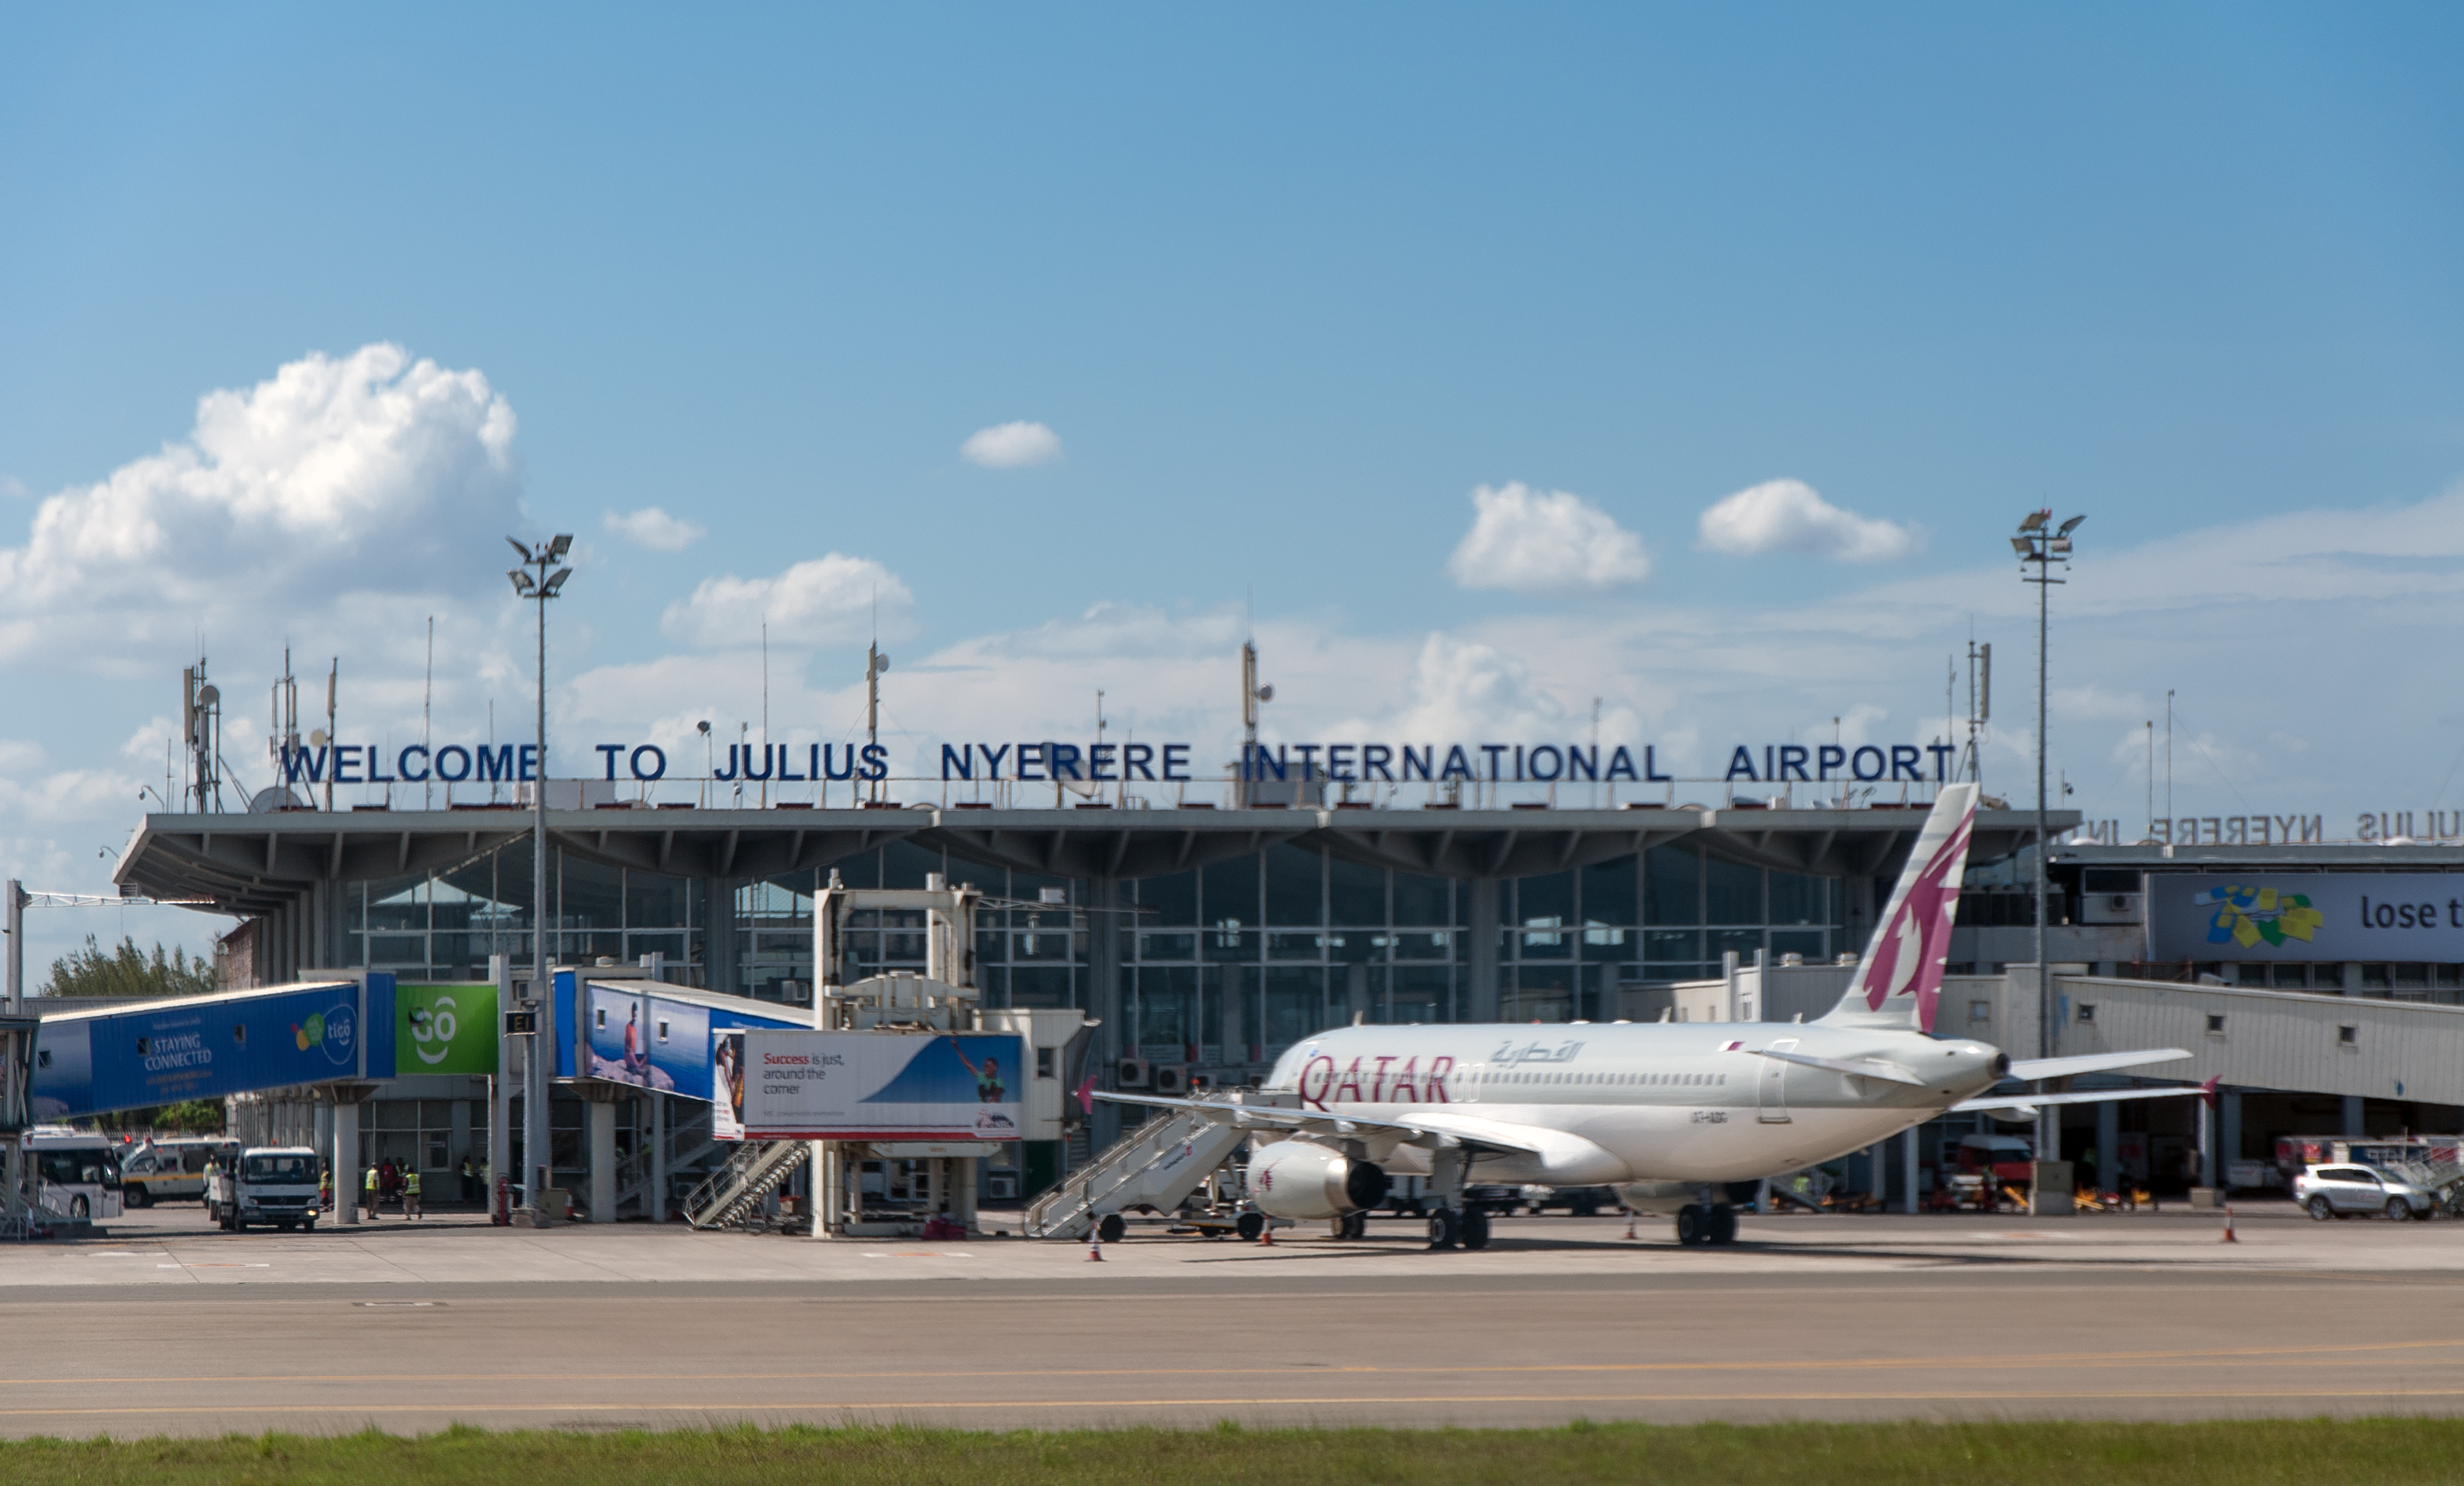 Julius Nyerere airport